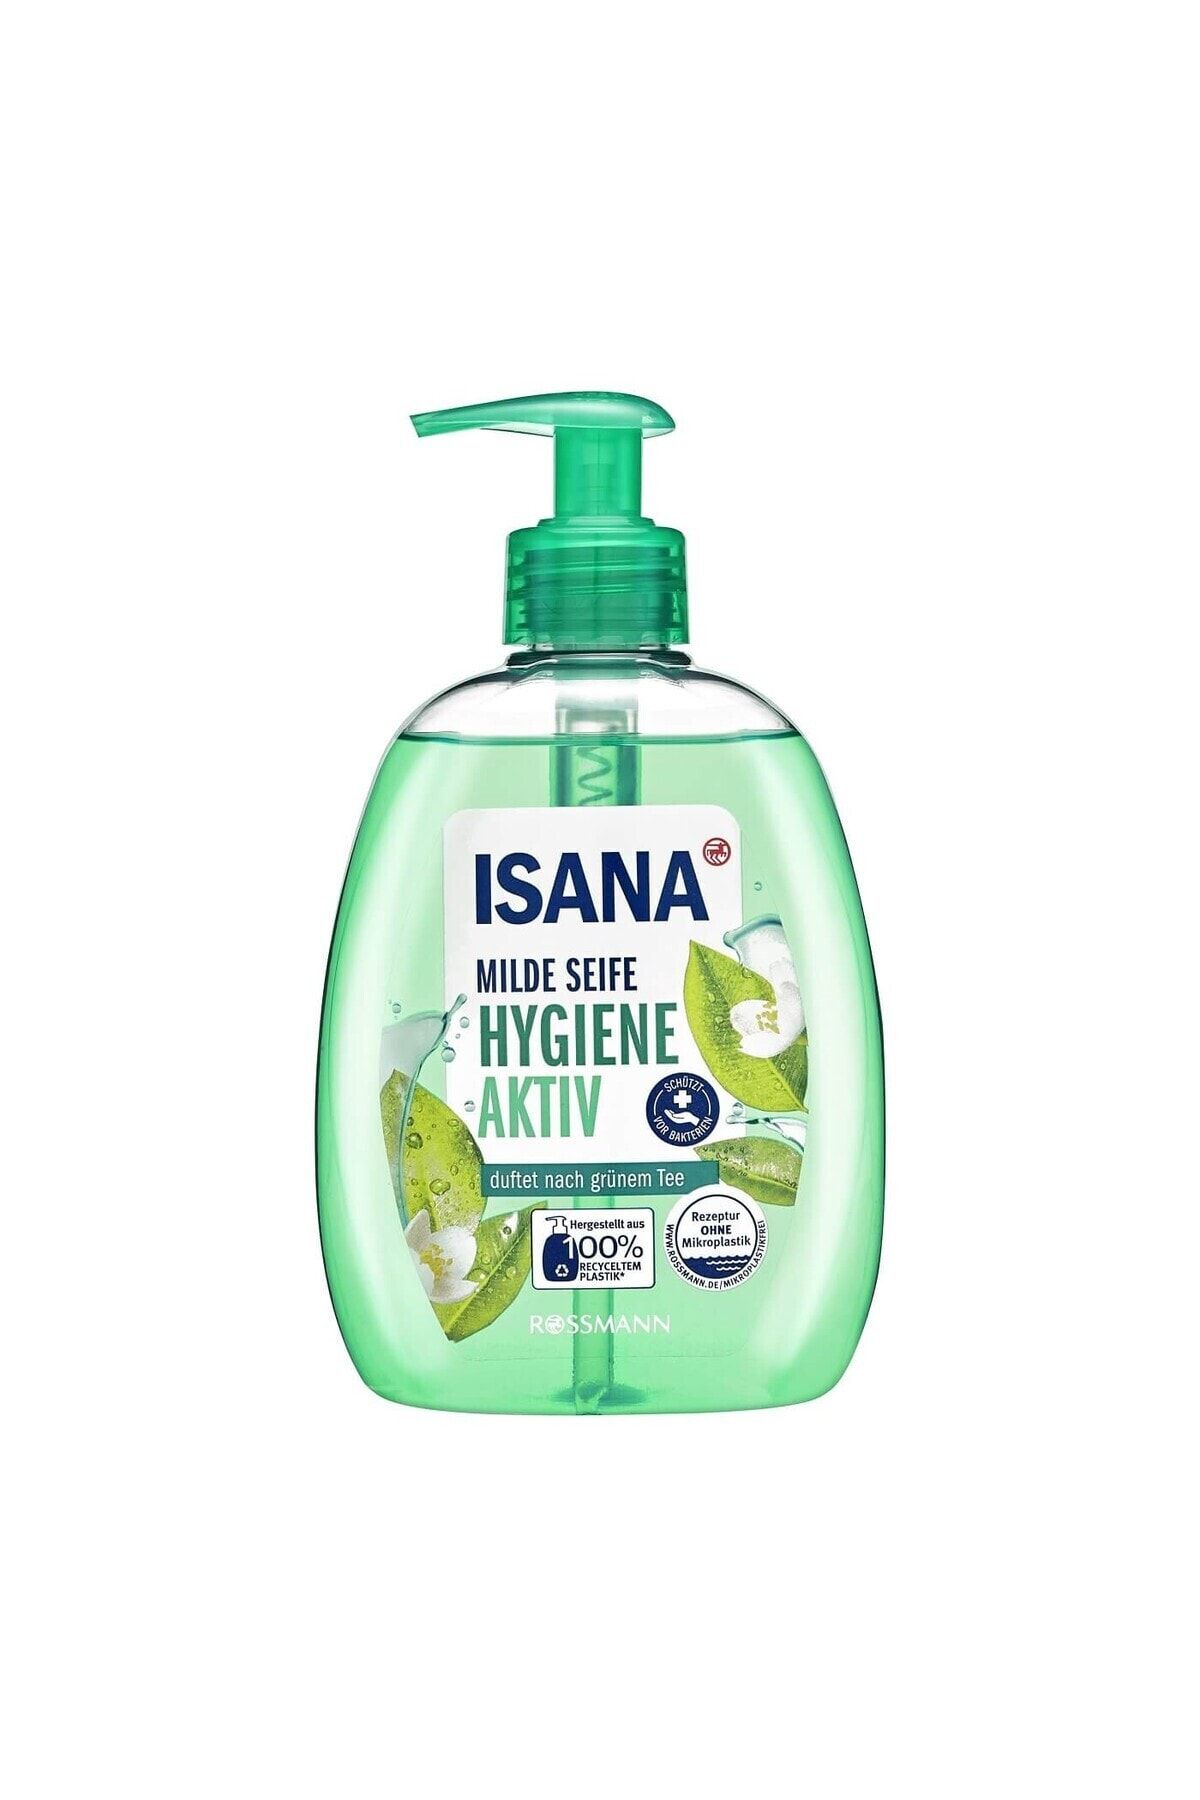 ISANA Marka: Aktif Hijyen Sıvı Sabun Yeşil Çay Kategori: Banyo Sabunu